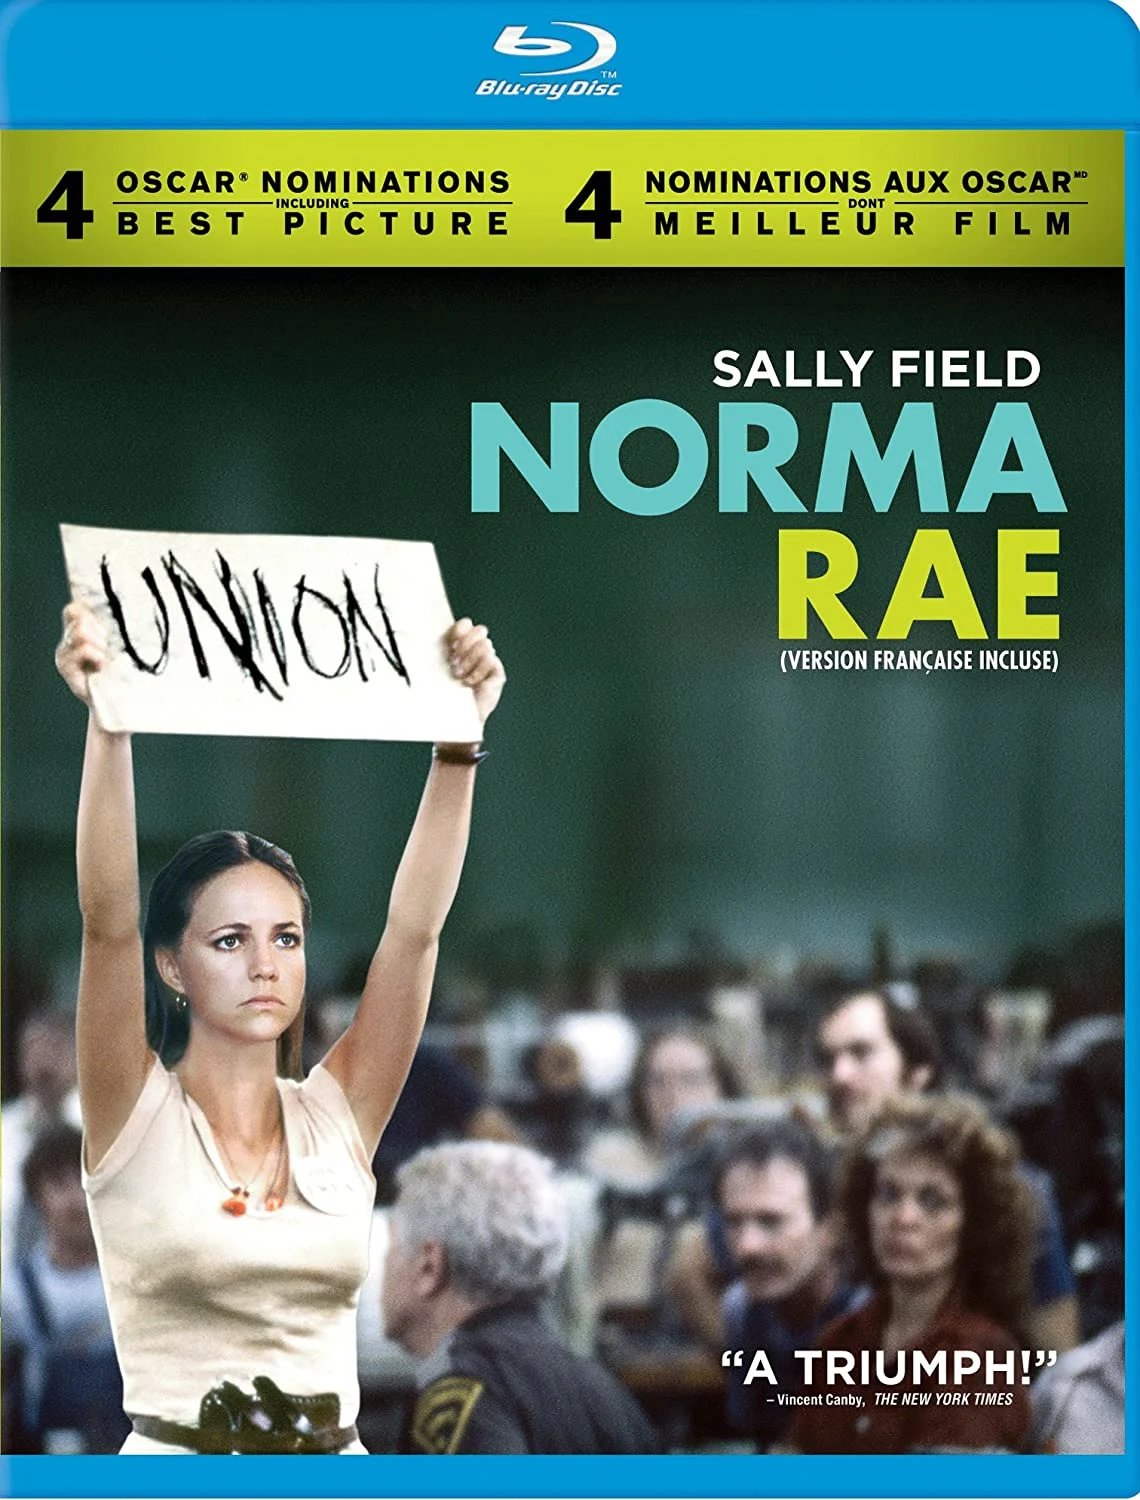 Norma Rae: 35th Ann. Ed. (Blu-ray) on MovieShack